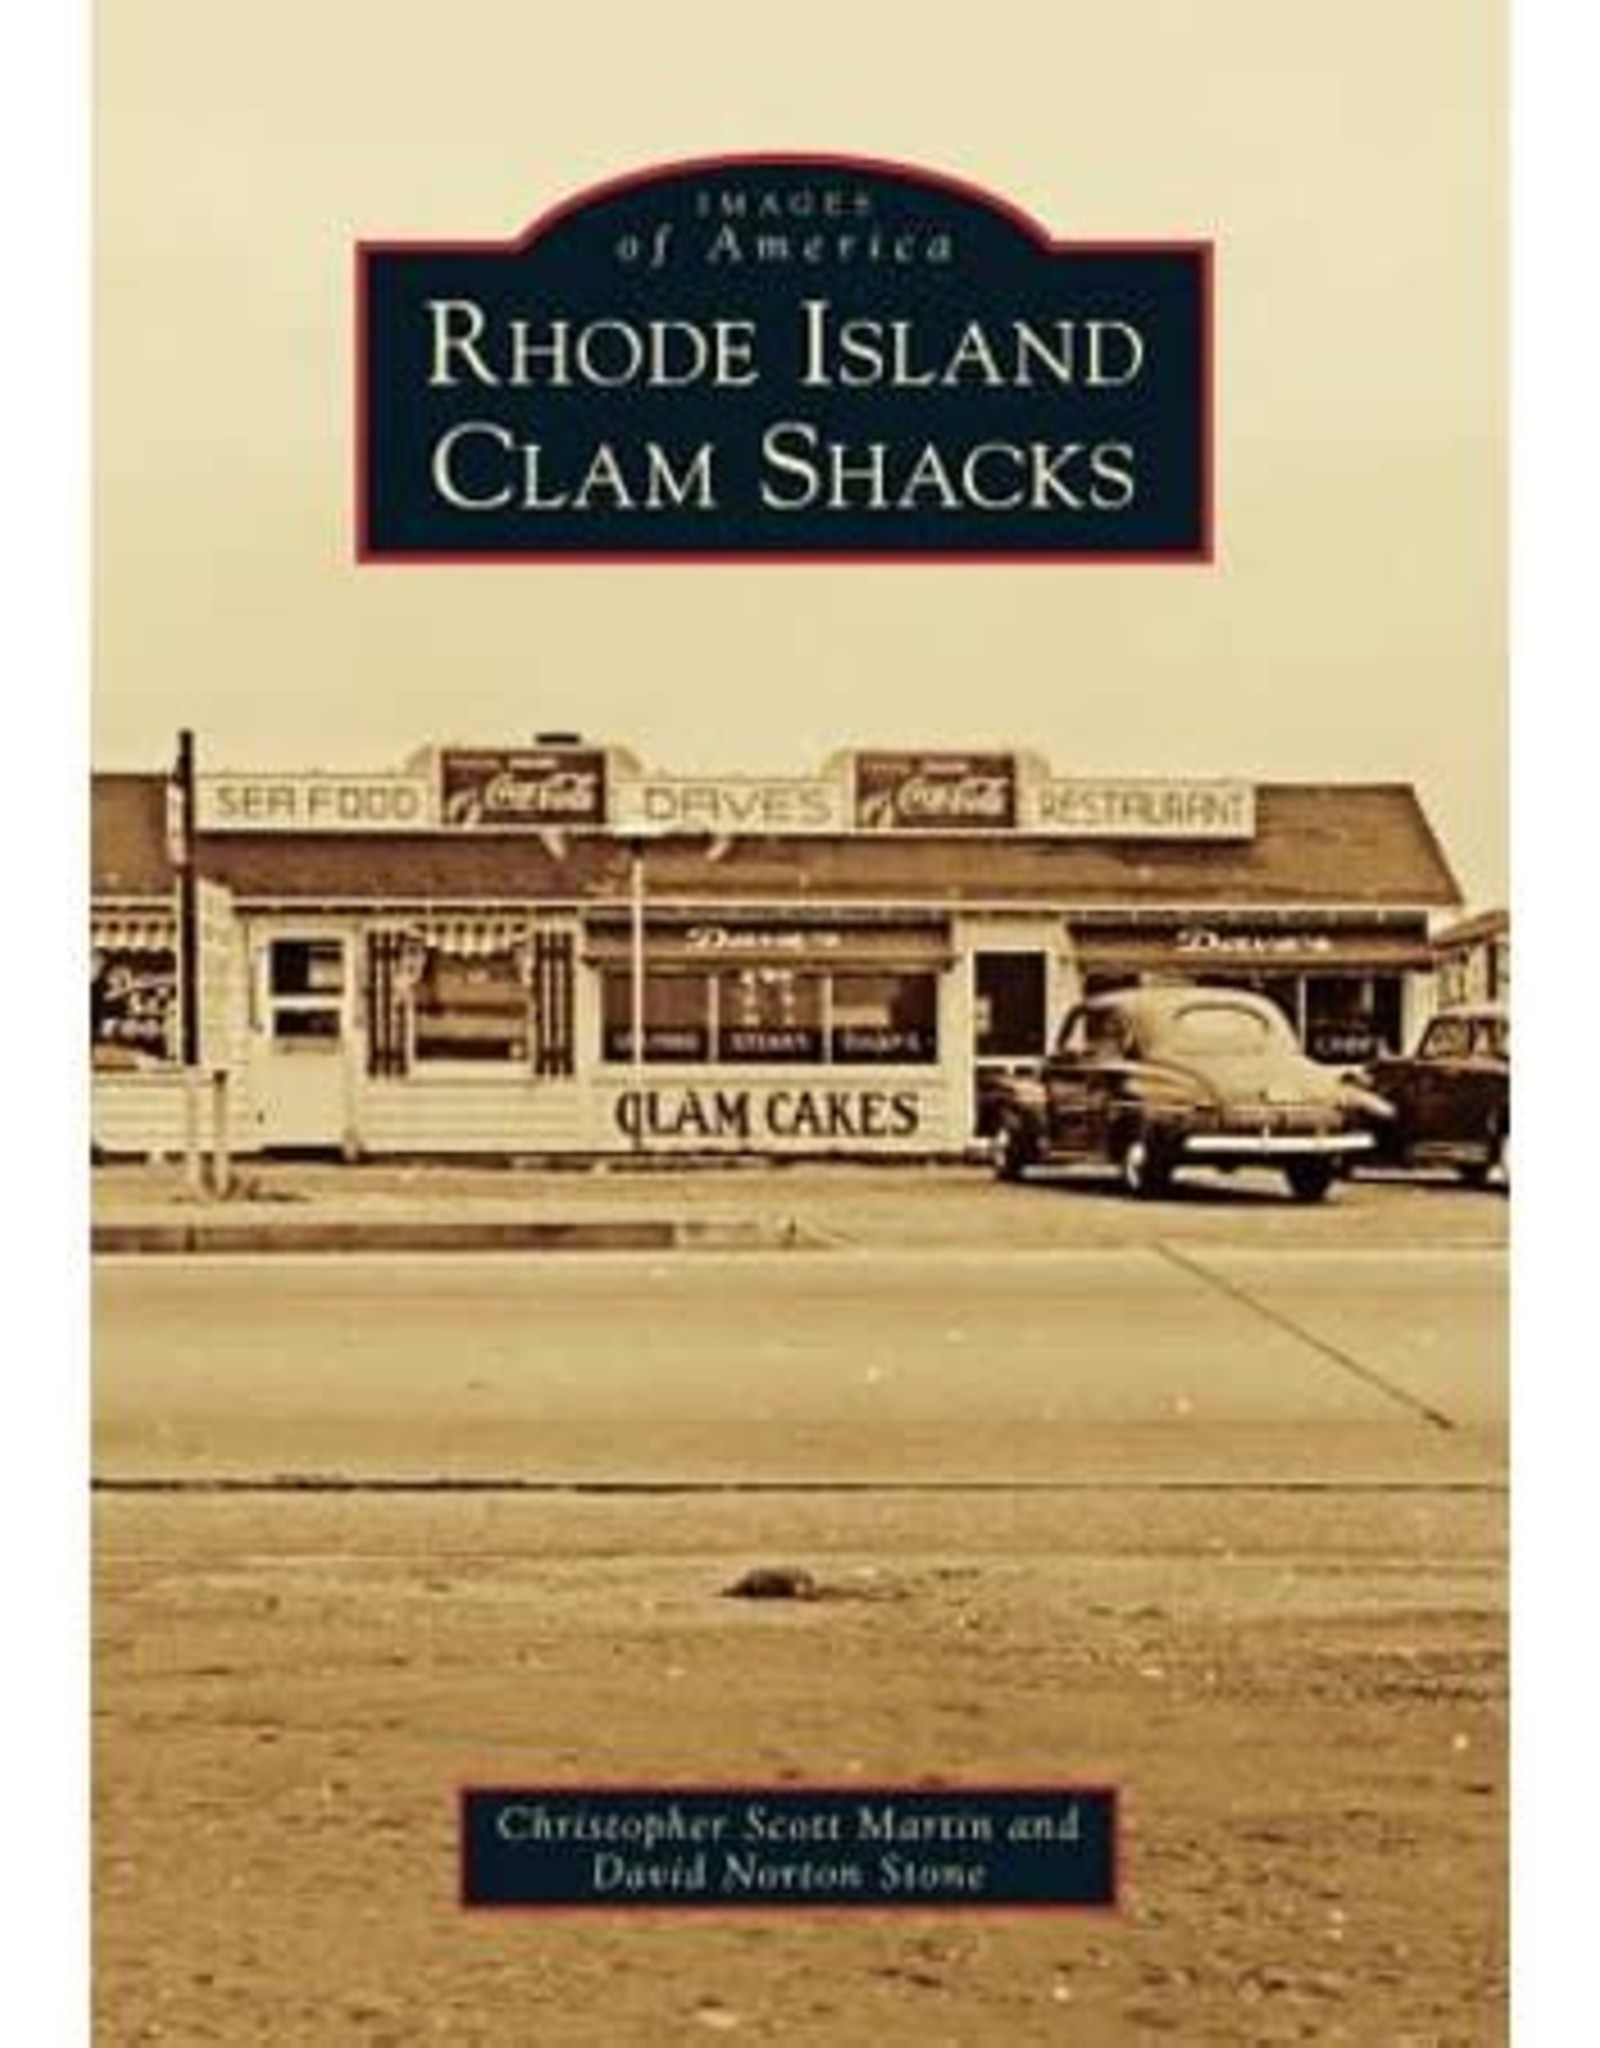 Rhode Island Clam Shacks